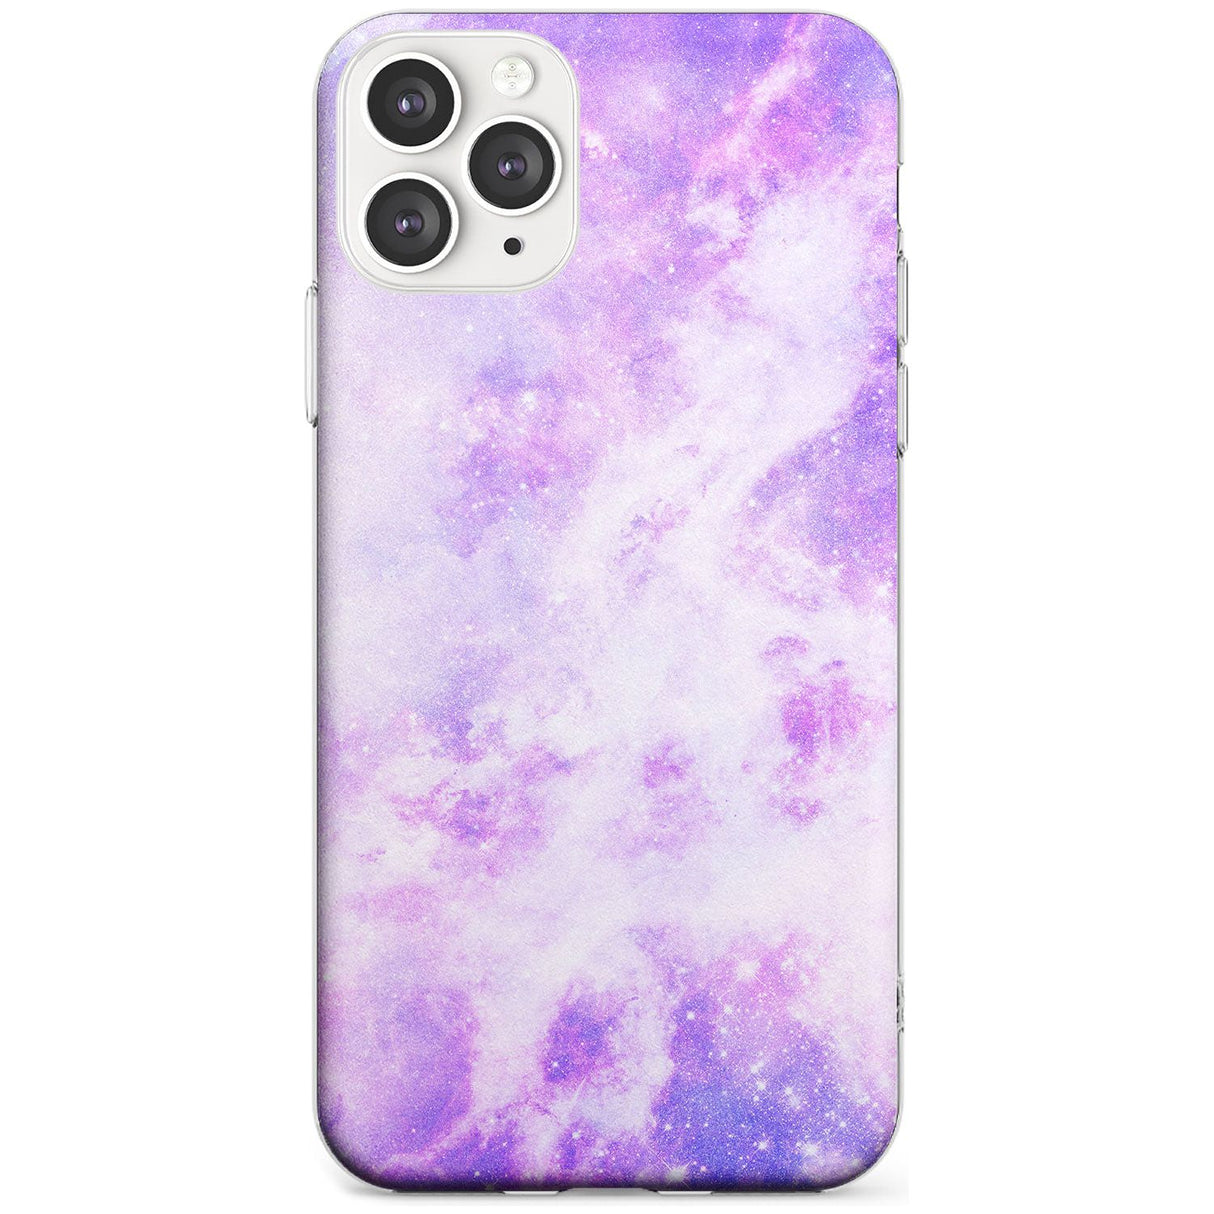 Purple Galaxy Pattern Design Slim TPU Phone Case for iPhone 11 Pro Max